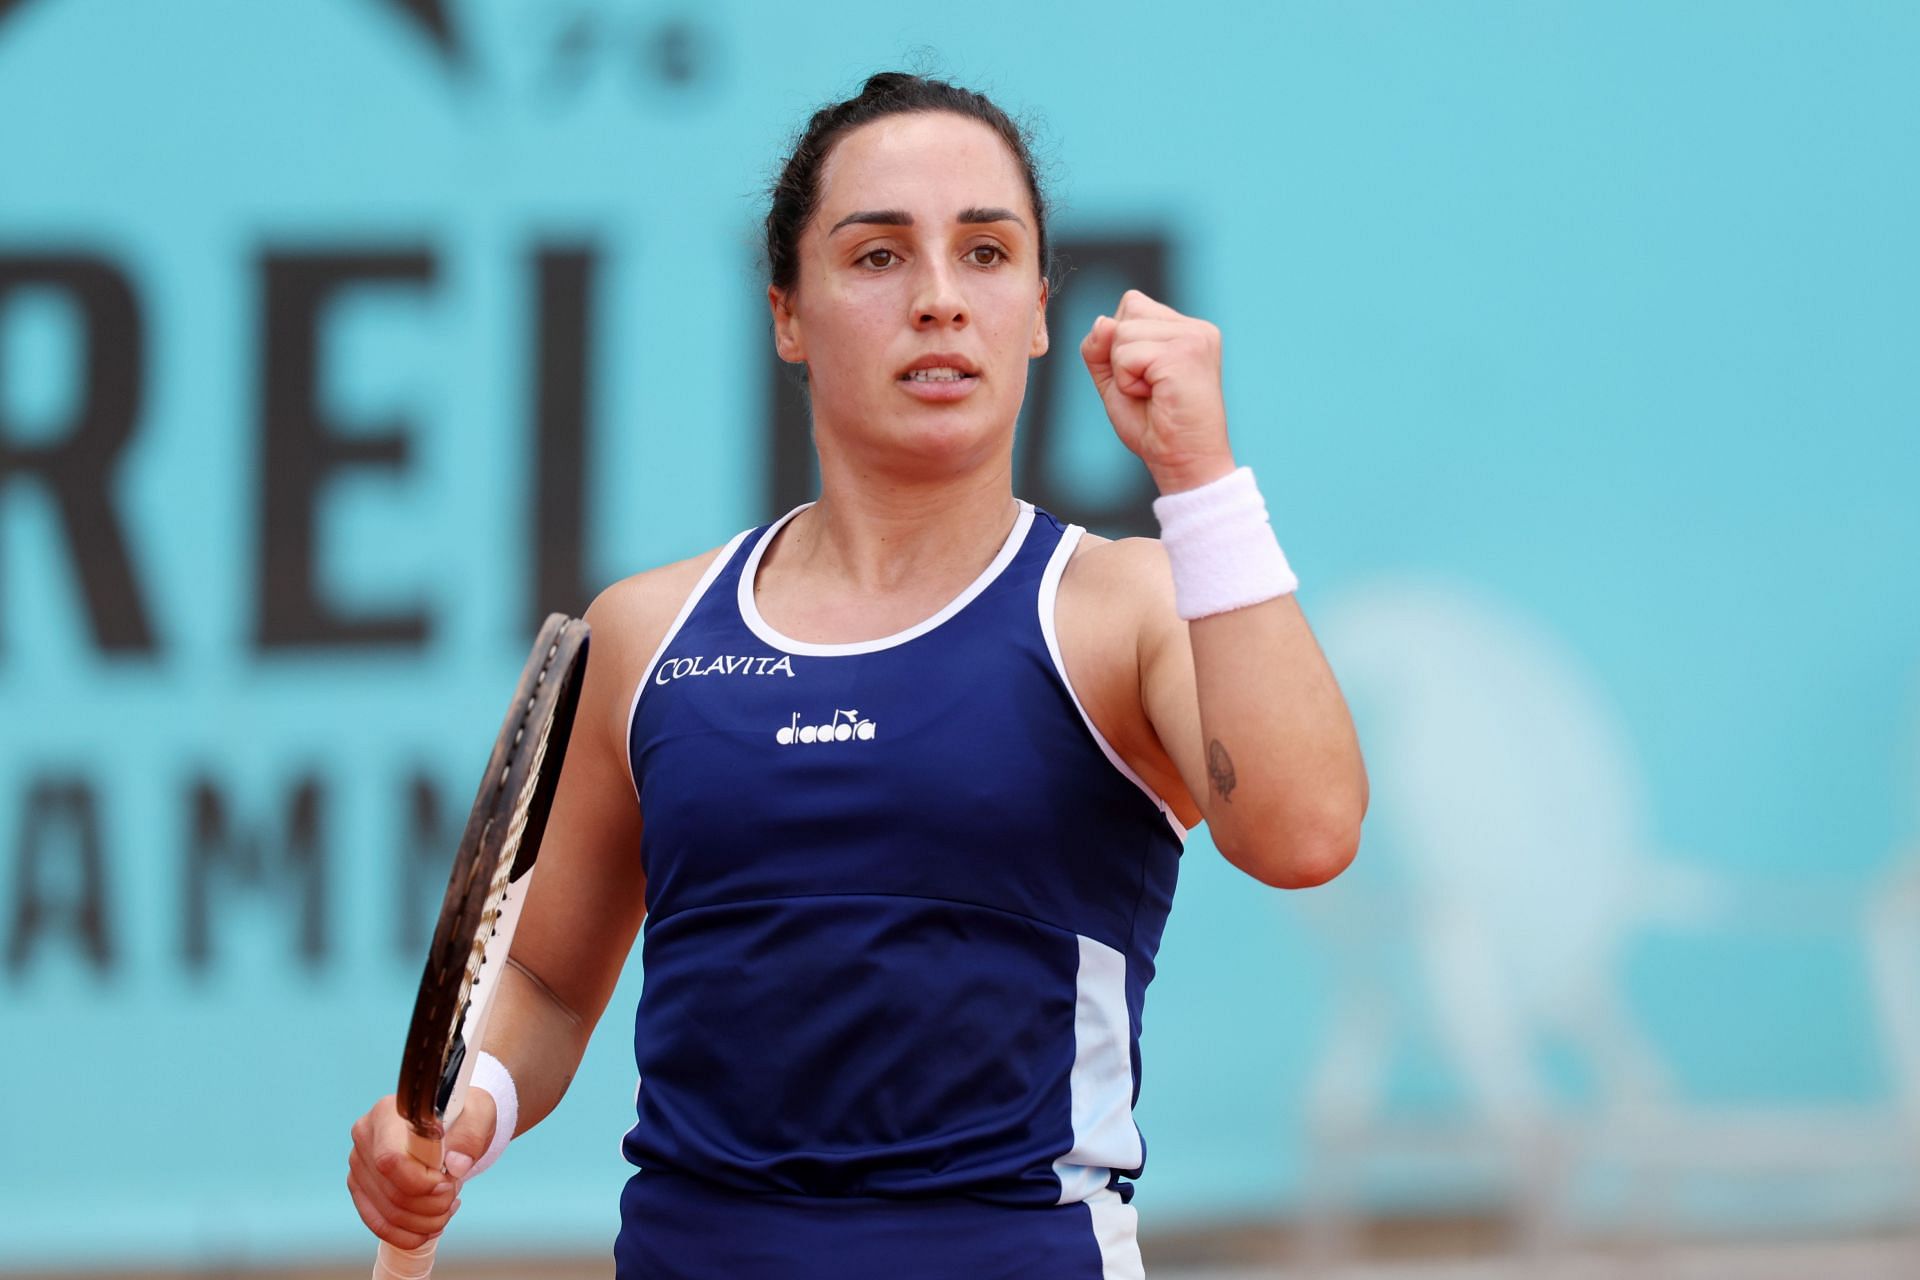 Martina Trevisan at the 2023 Madrid Open.